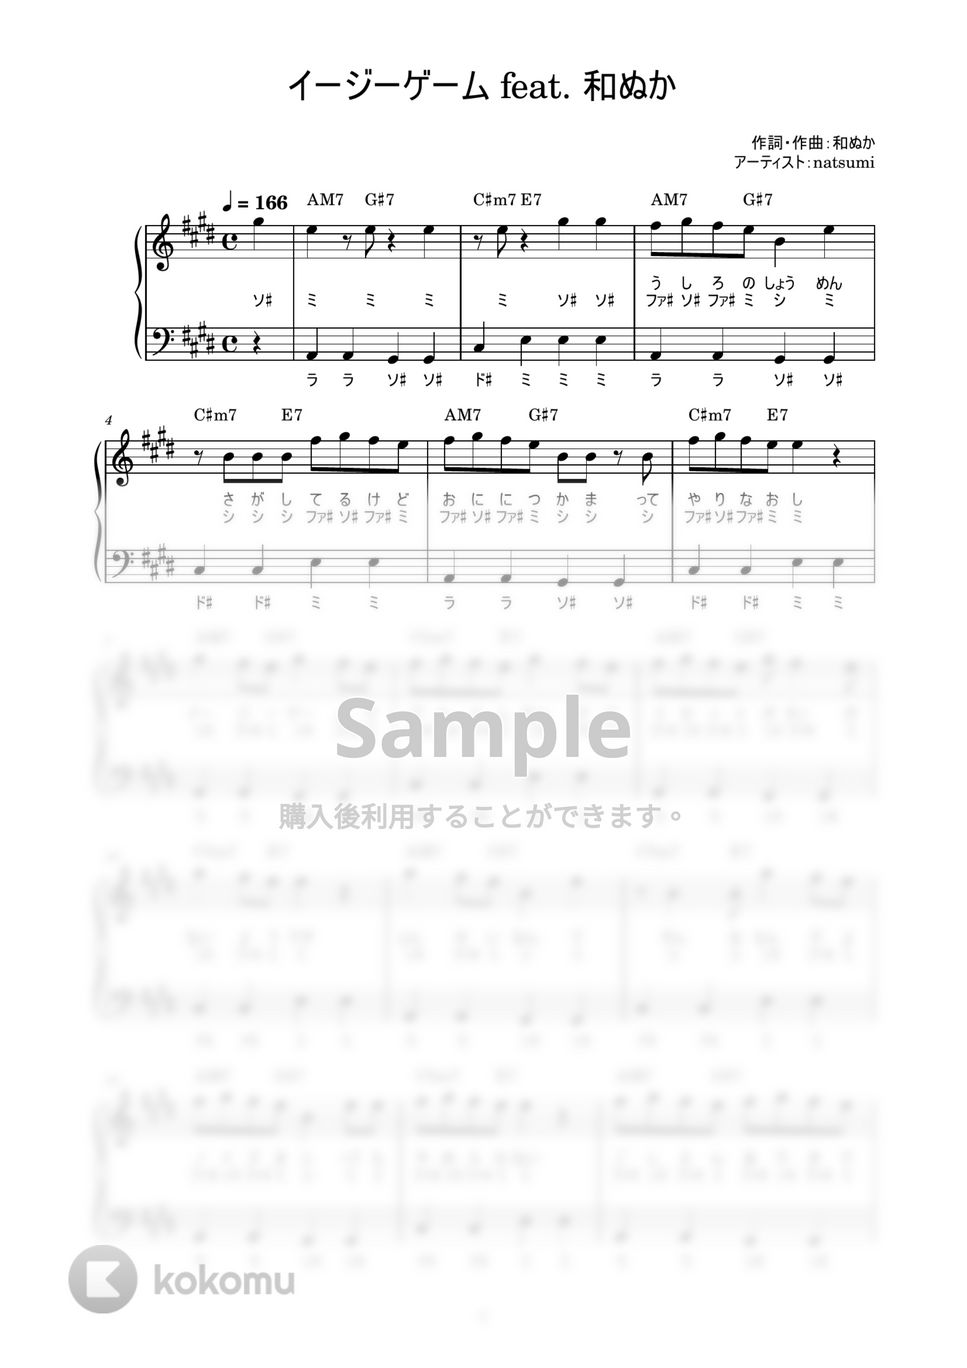 natsumi - イージーゲーム feat. 和ぬか (かんたん / 歌詞付き / ドレミ付き / 初心者) by piano.tokyo